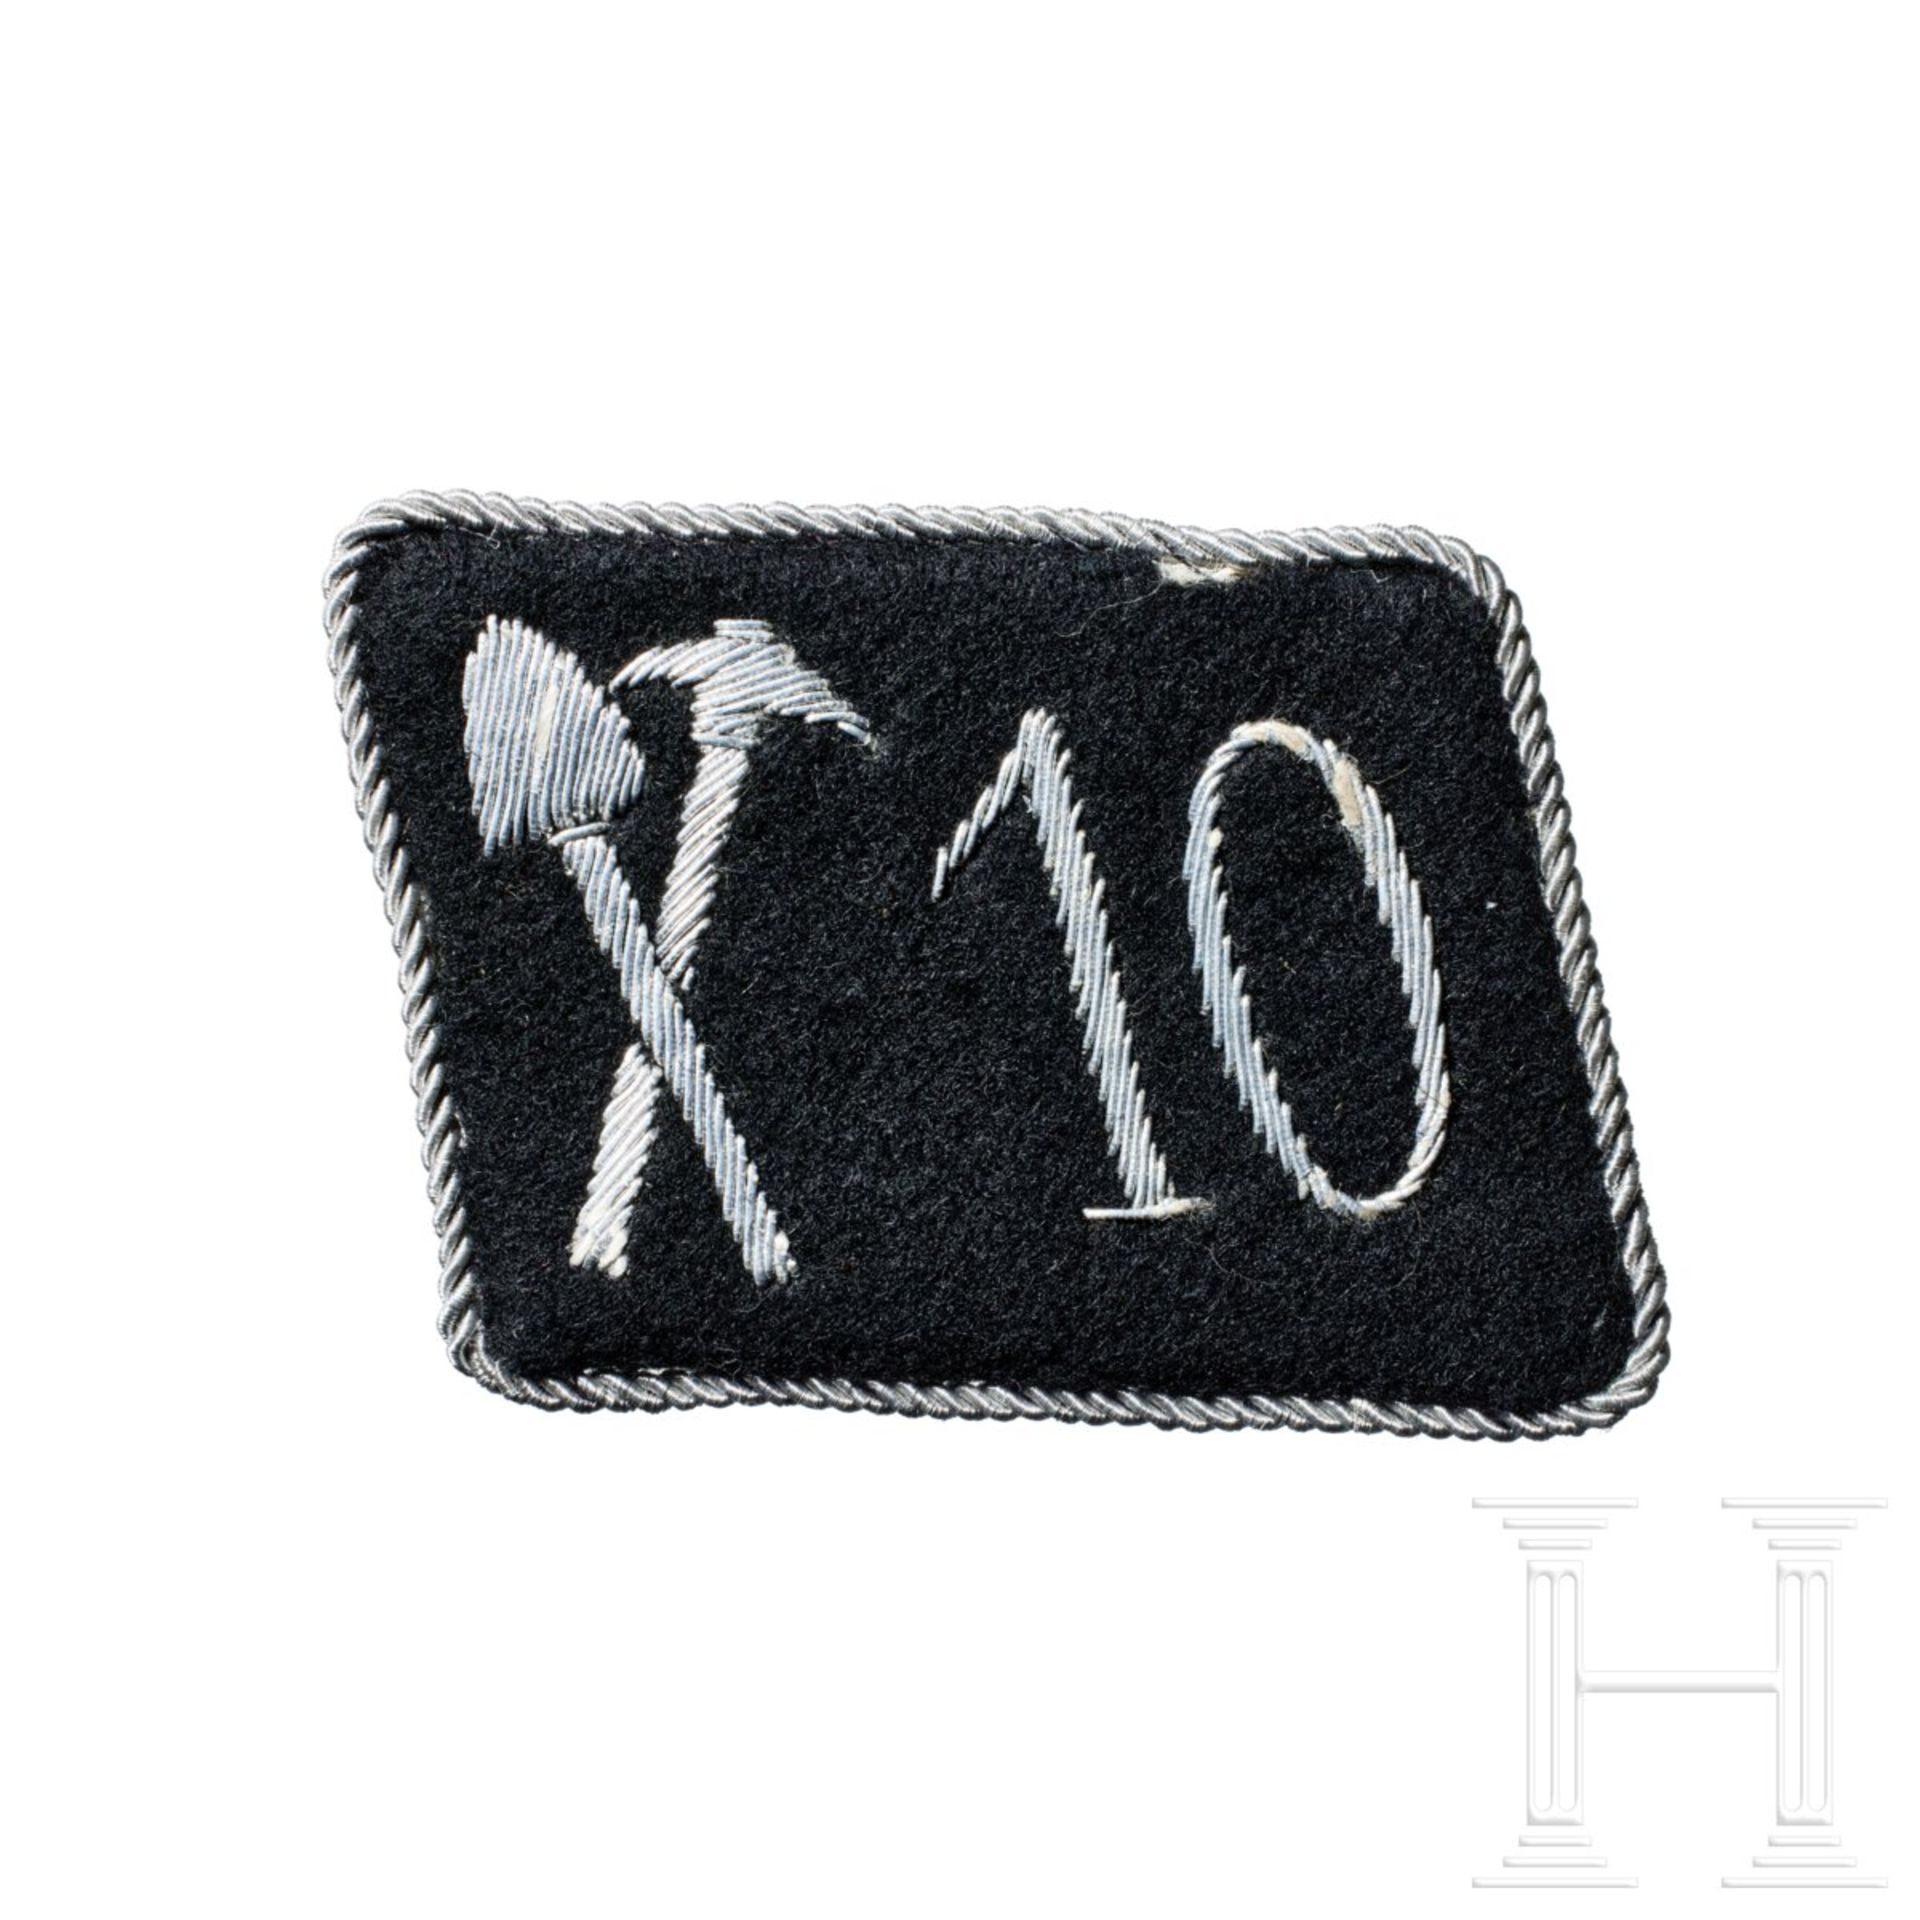 A Right Collar Tab for SS-Pioneer Sturmbann 10 "Breslau" Officer